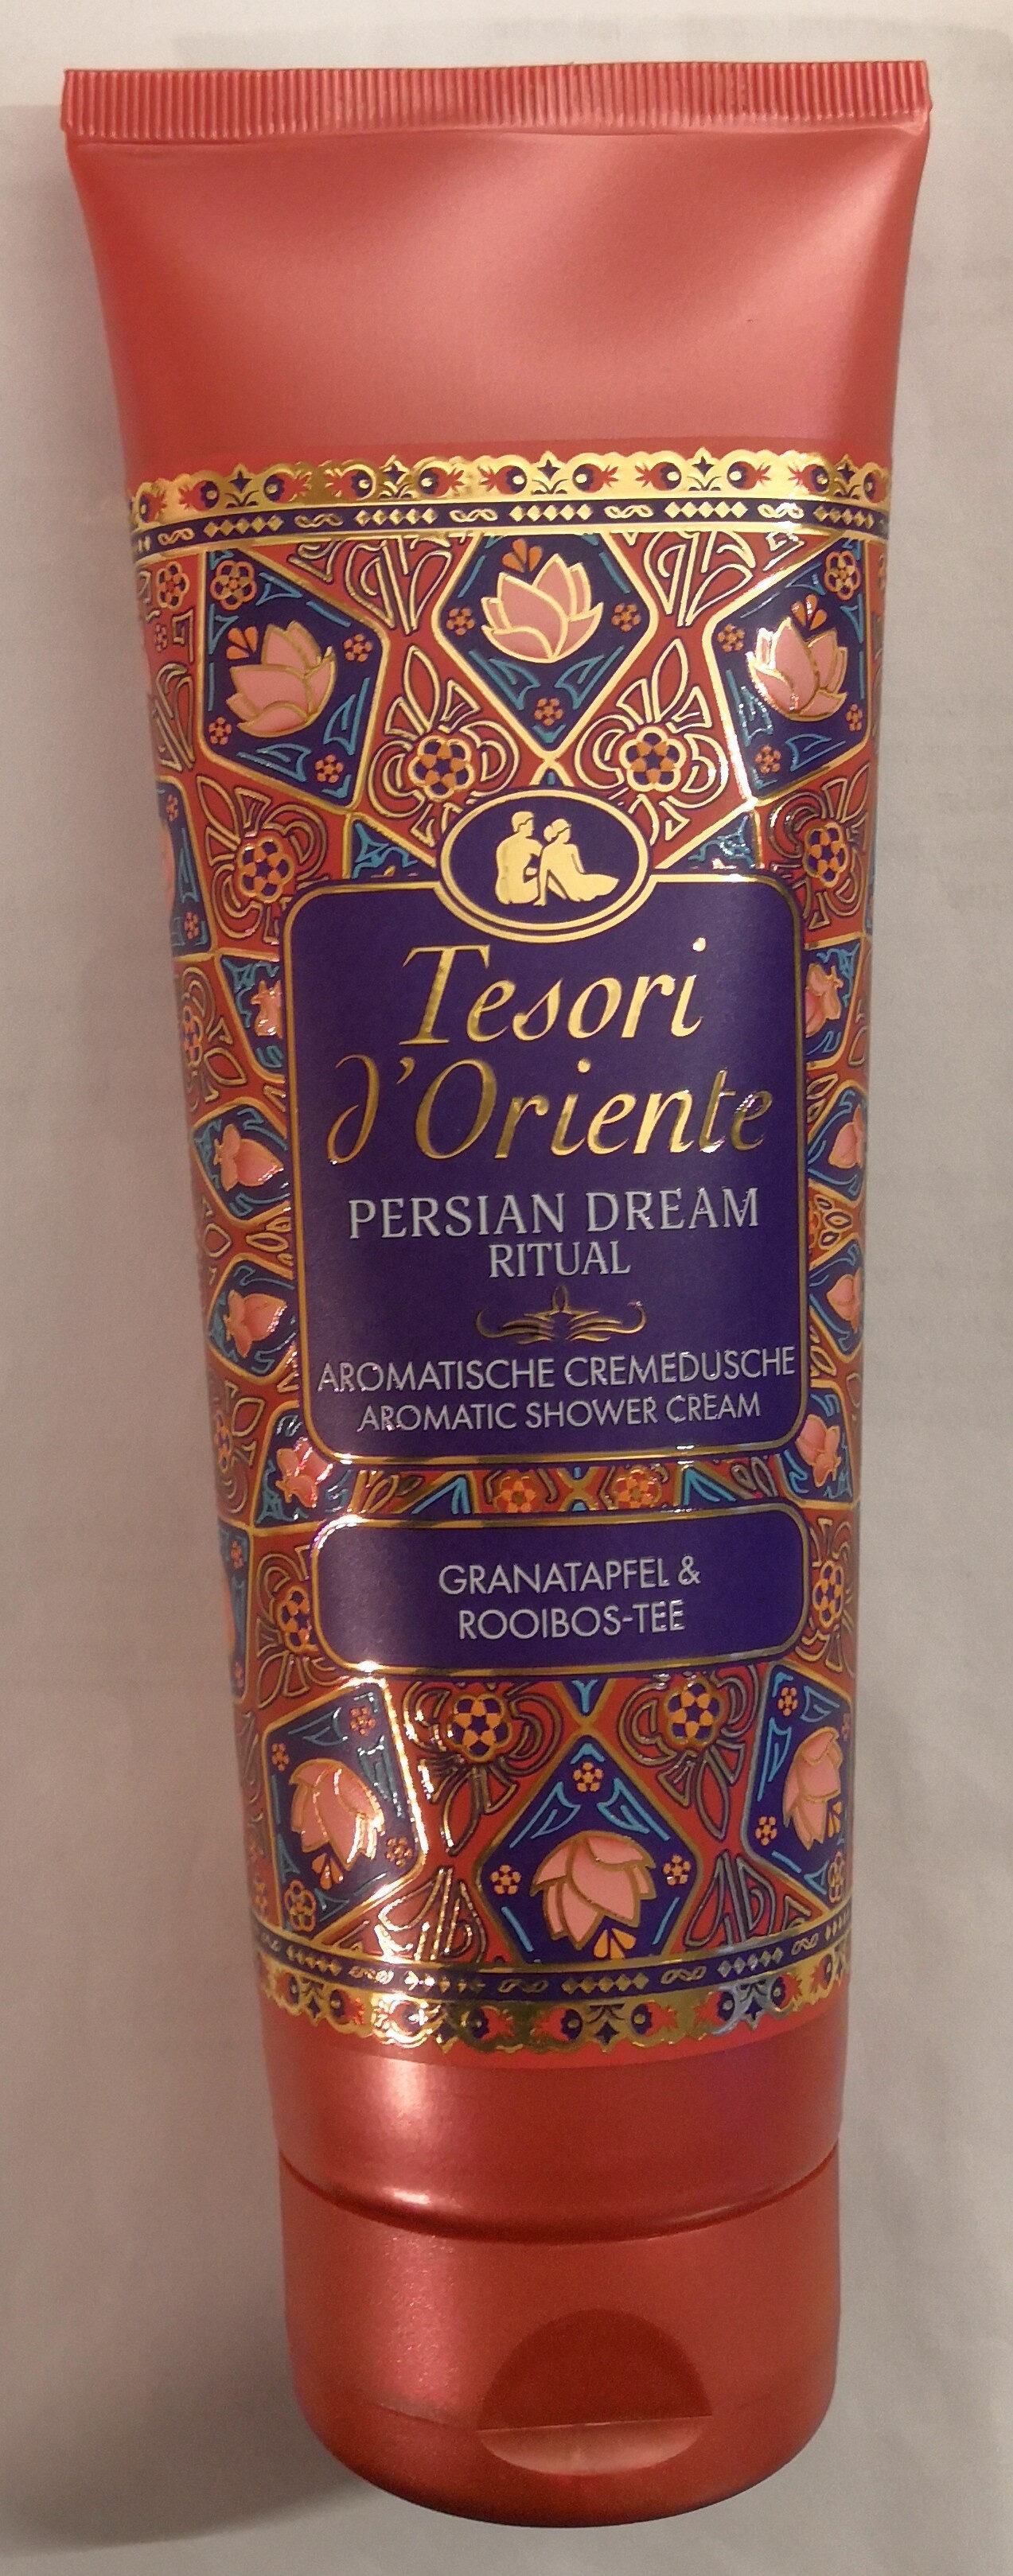 Persian Dream Ritual Granatapfel & Rooibos-Tee - Produto - de